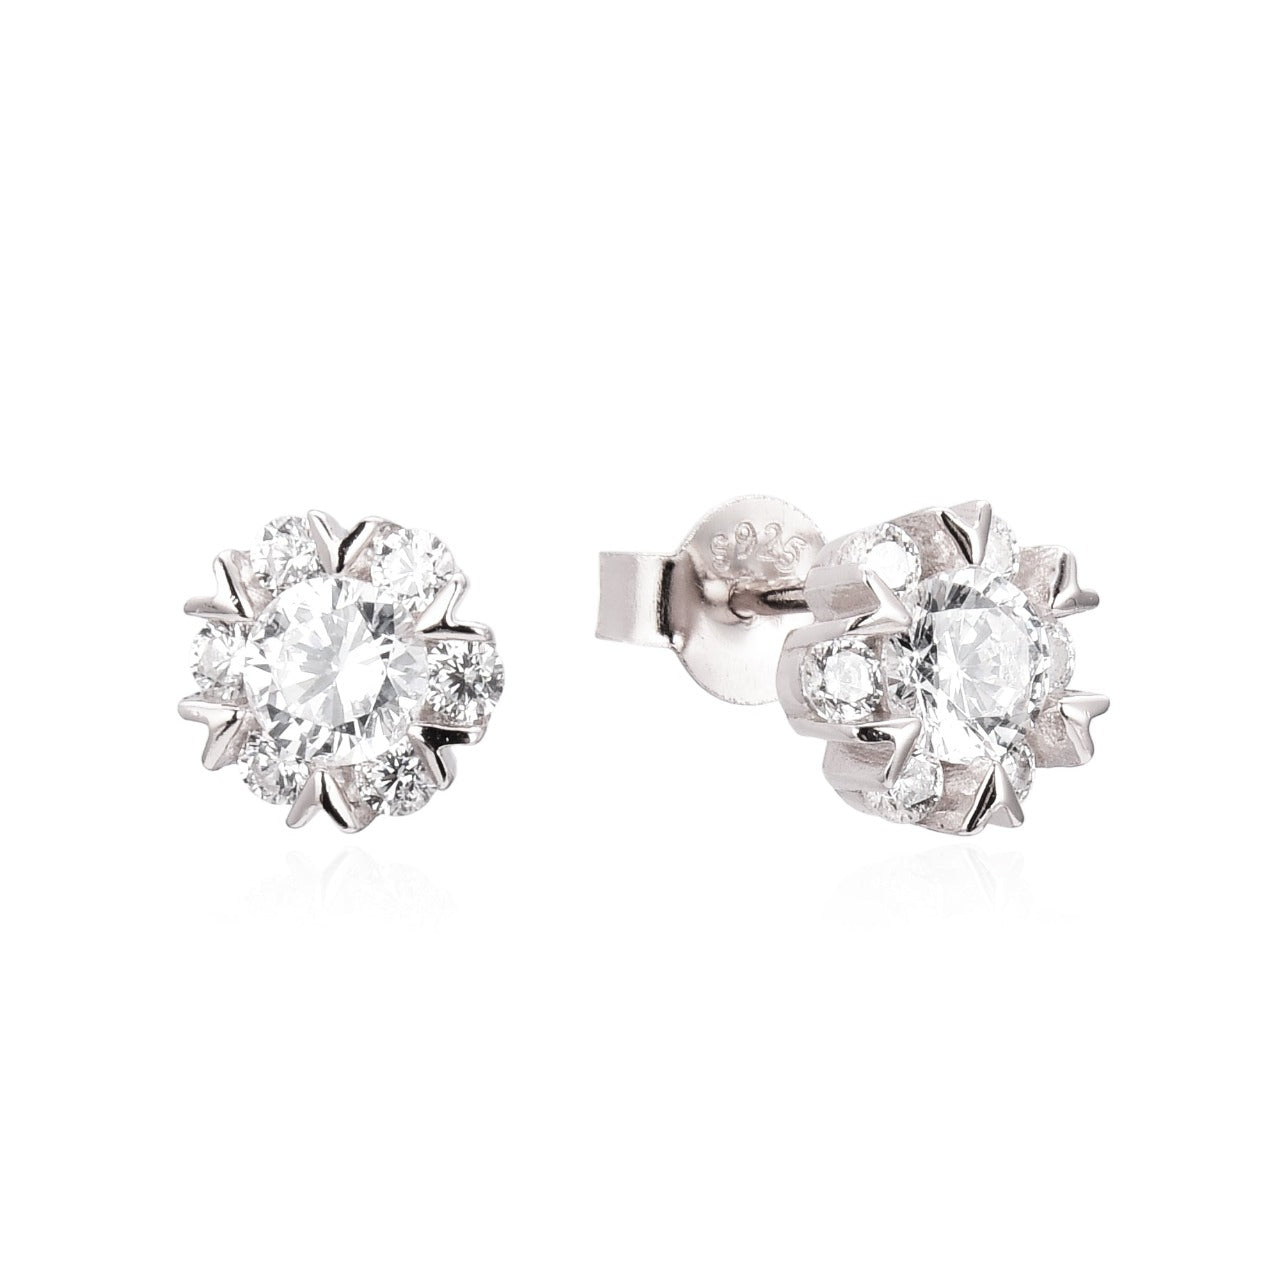 Silver Claw Star Stud Earrings by Kilkenny Silver   Sterling silver stud earrings with cubic zirconia stone.